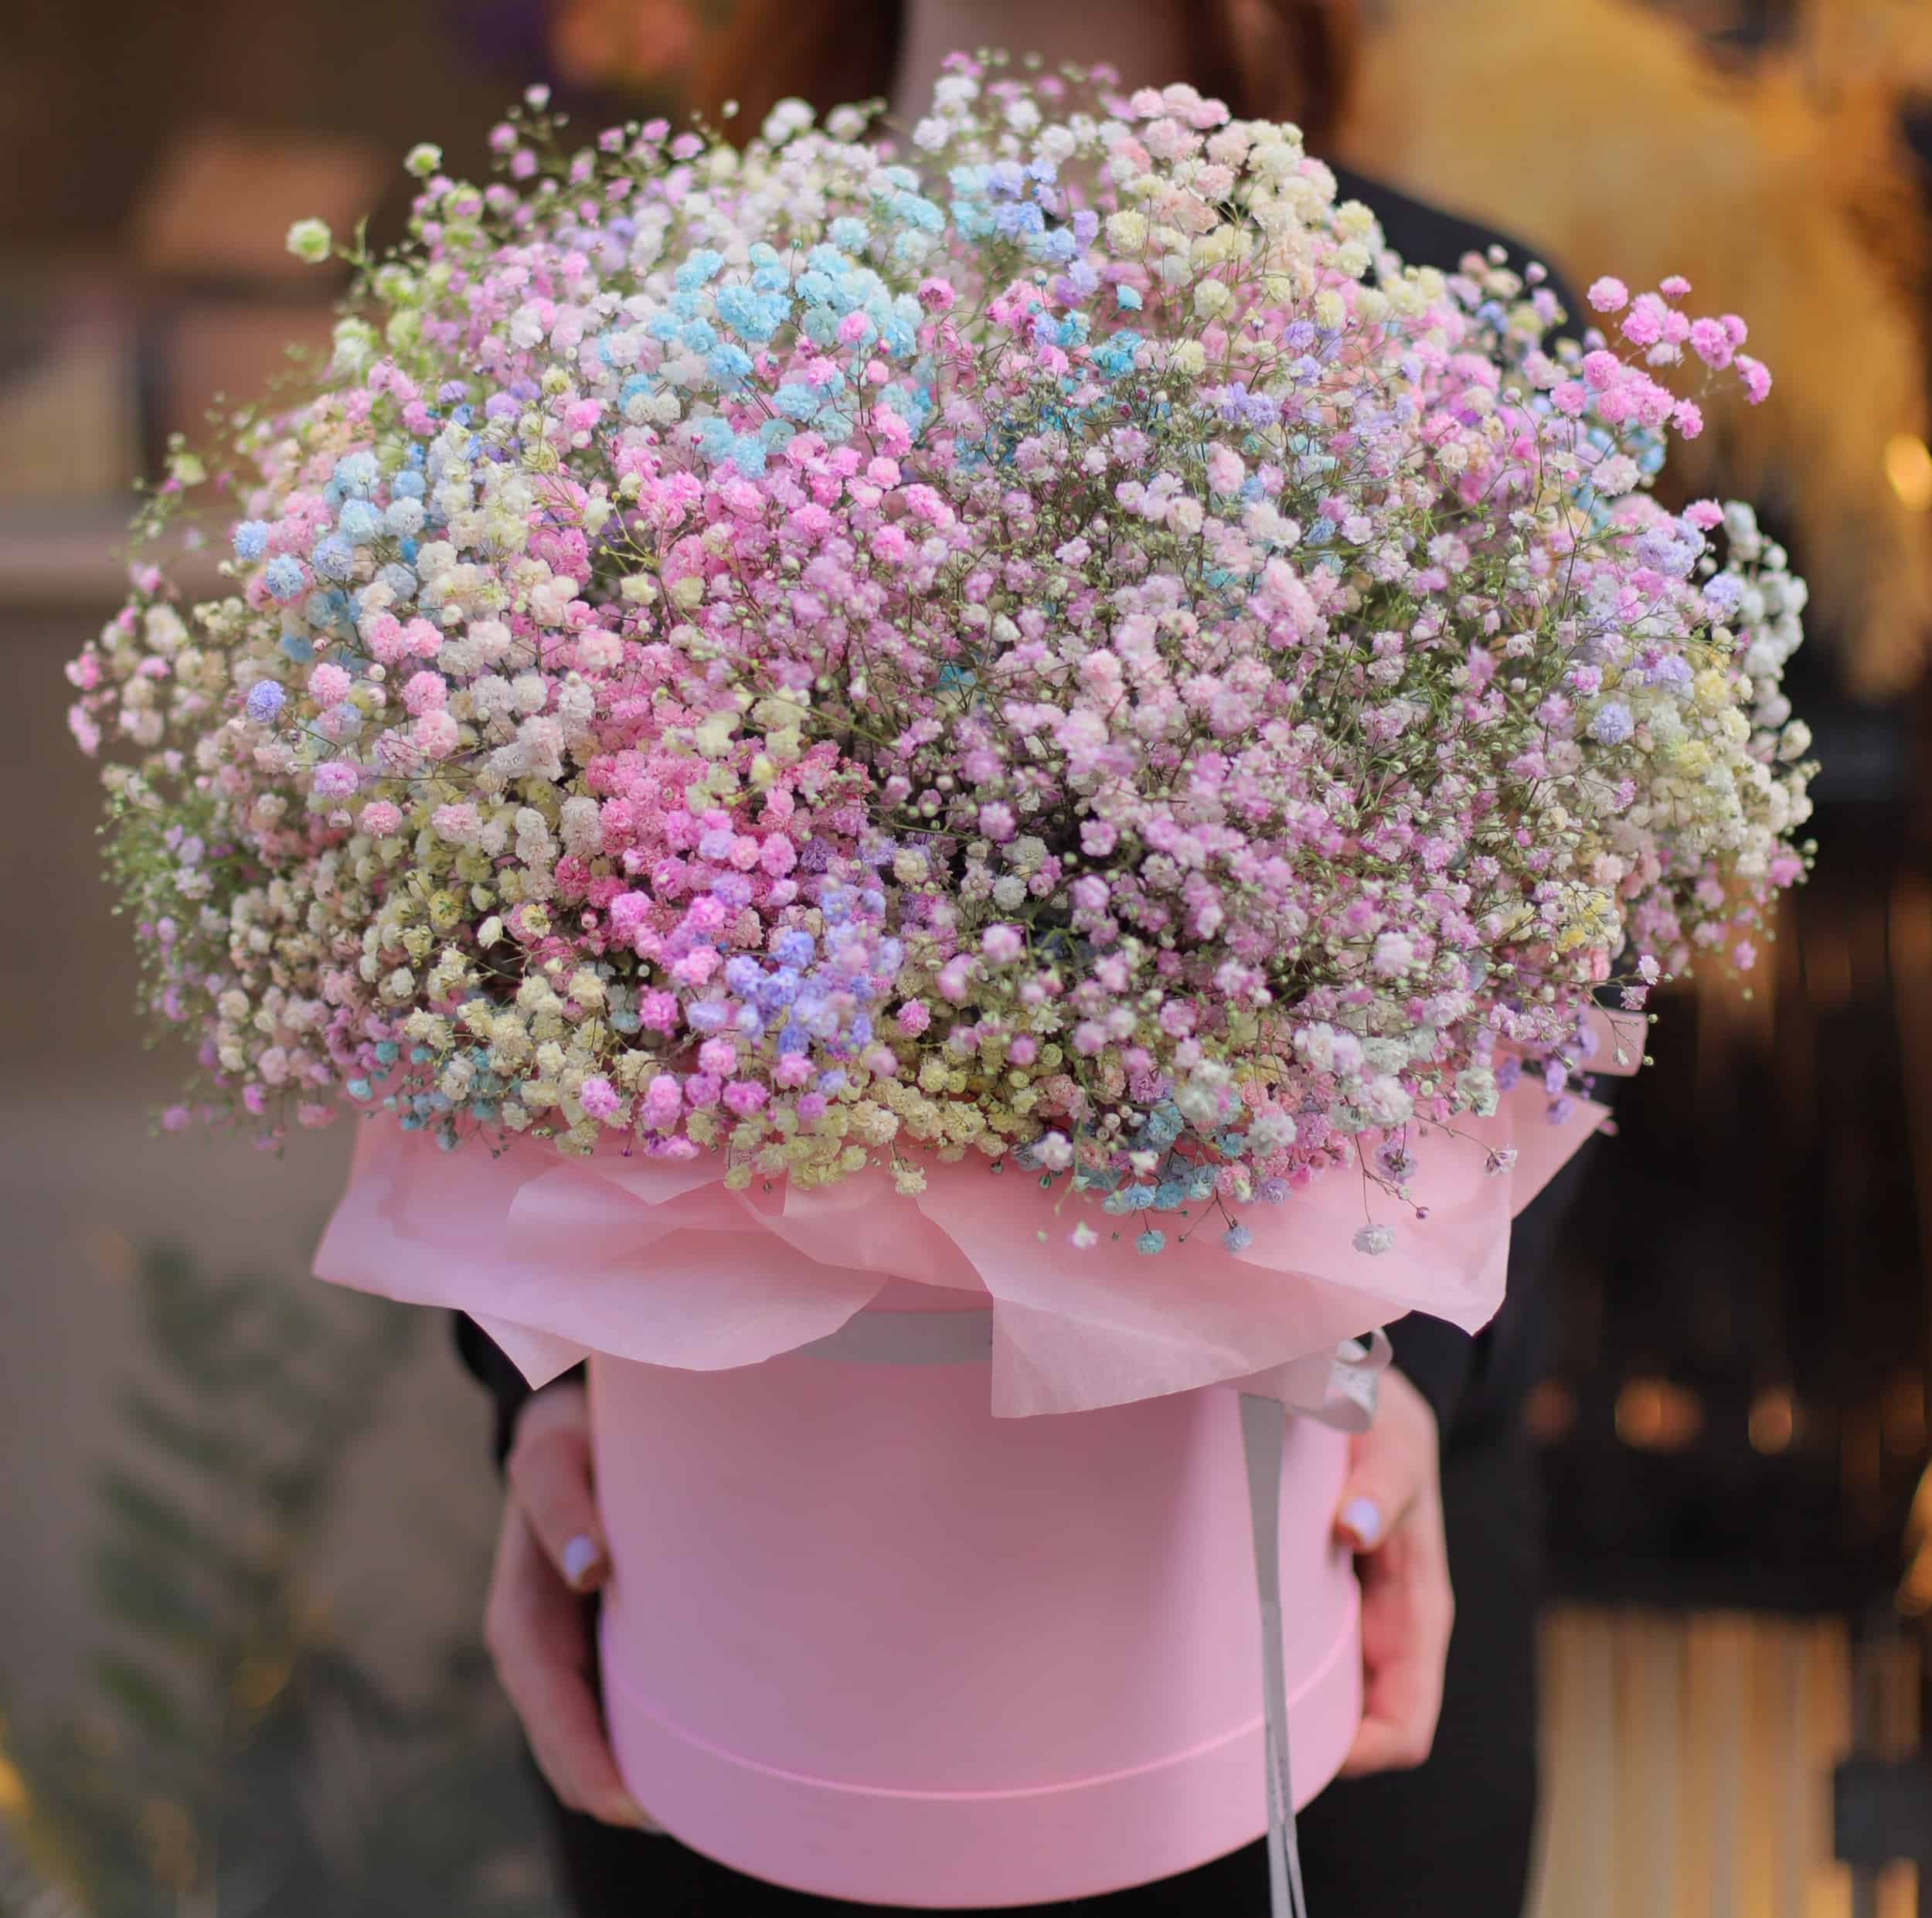 Artificial Fake Baby's Breath Gypsophila Silk Flowers Bouquet Home Wedding  Decor 